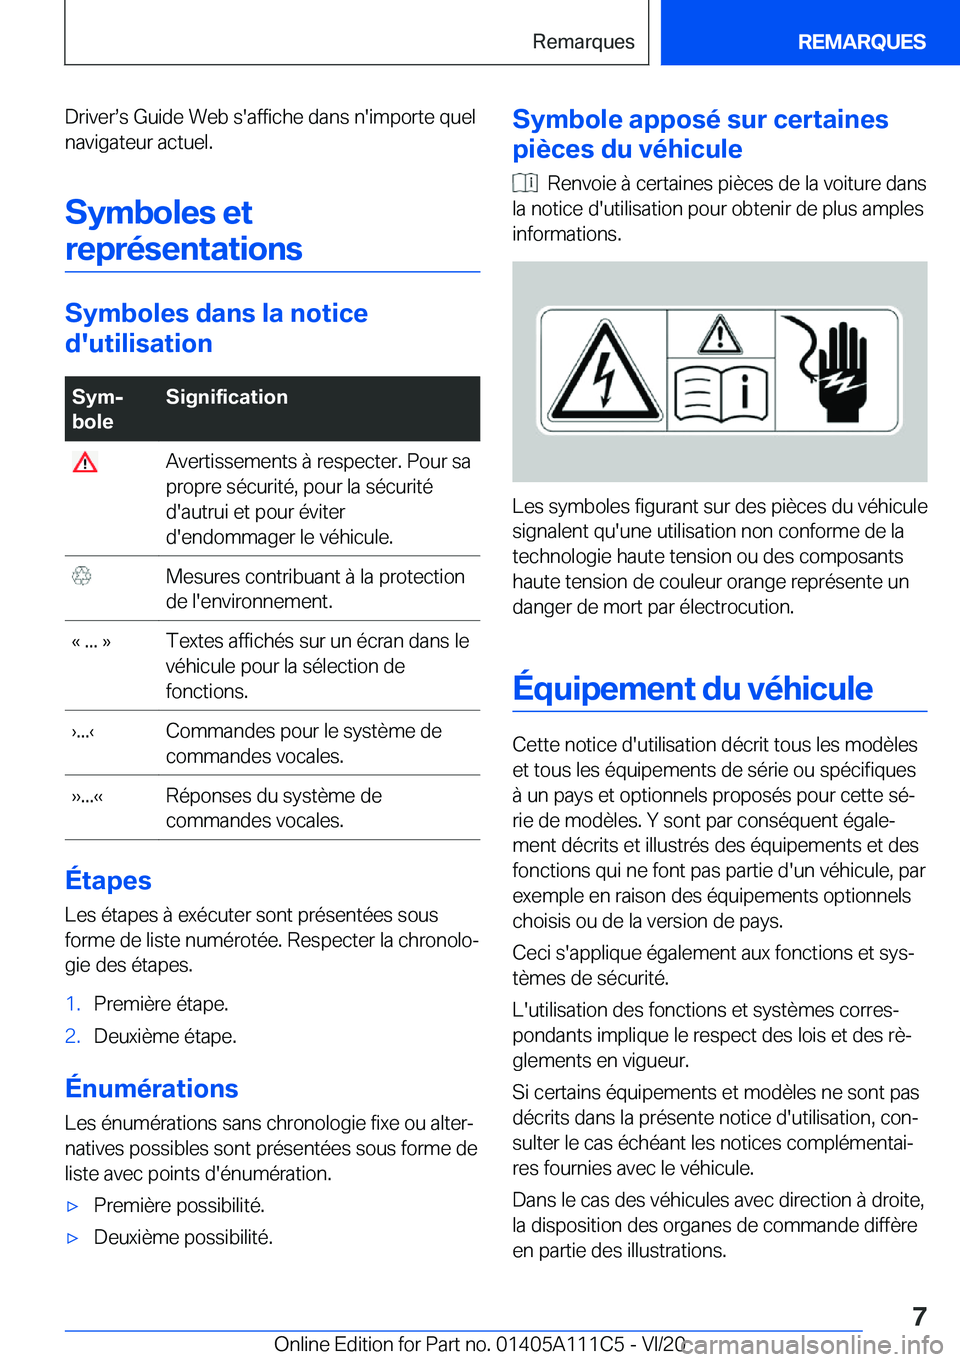 BMW 3 SERIES SEDAN PLUG-IN HYBRID 2021  Notices Demploi (in French) �D�r�i�v�e�rs�s��G�u�i�d�e��W�e�b��s�'�a�f�f�i�c�h�e��d�a�n�s��n�'�i�m�p�o�r�t�e��q�u�e�l�n�a�v�i�g�a�t�e�u�r��a�c�t�u�e�l�.
�S�y�m�b�o�l�e�s��e�t�r�e�p�r�é�s�e�n�t�a�t�i�o�n�s
�S�y�